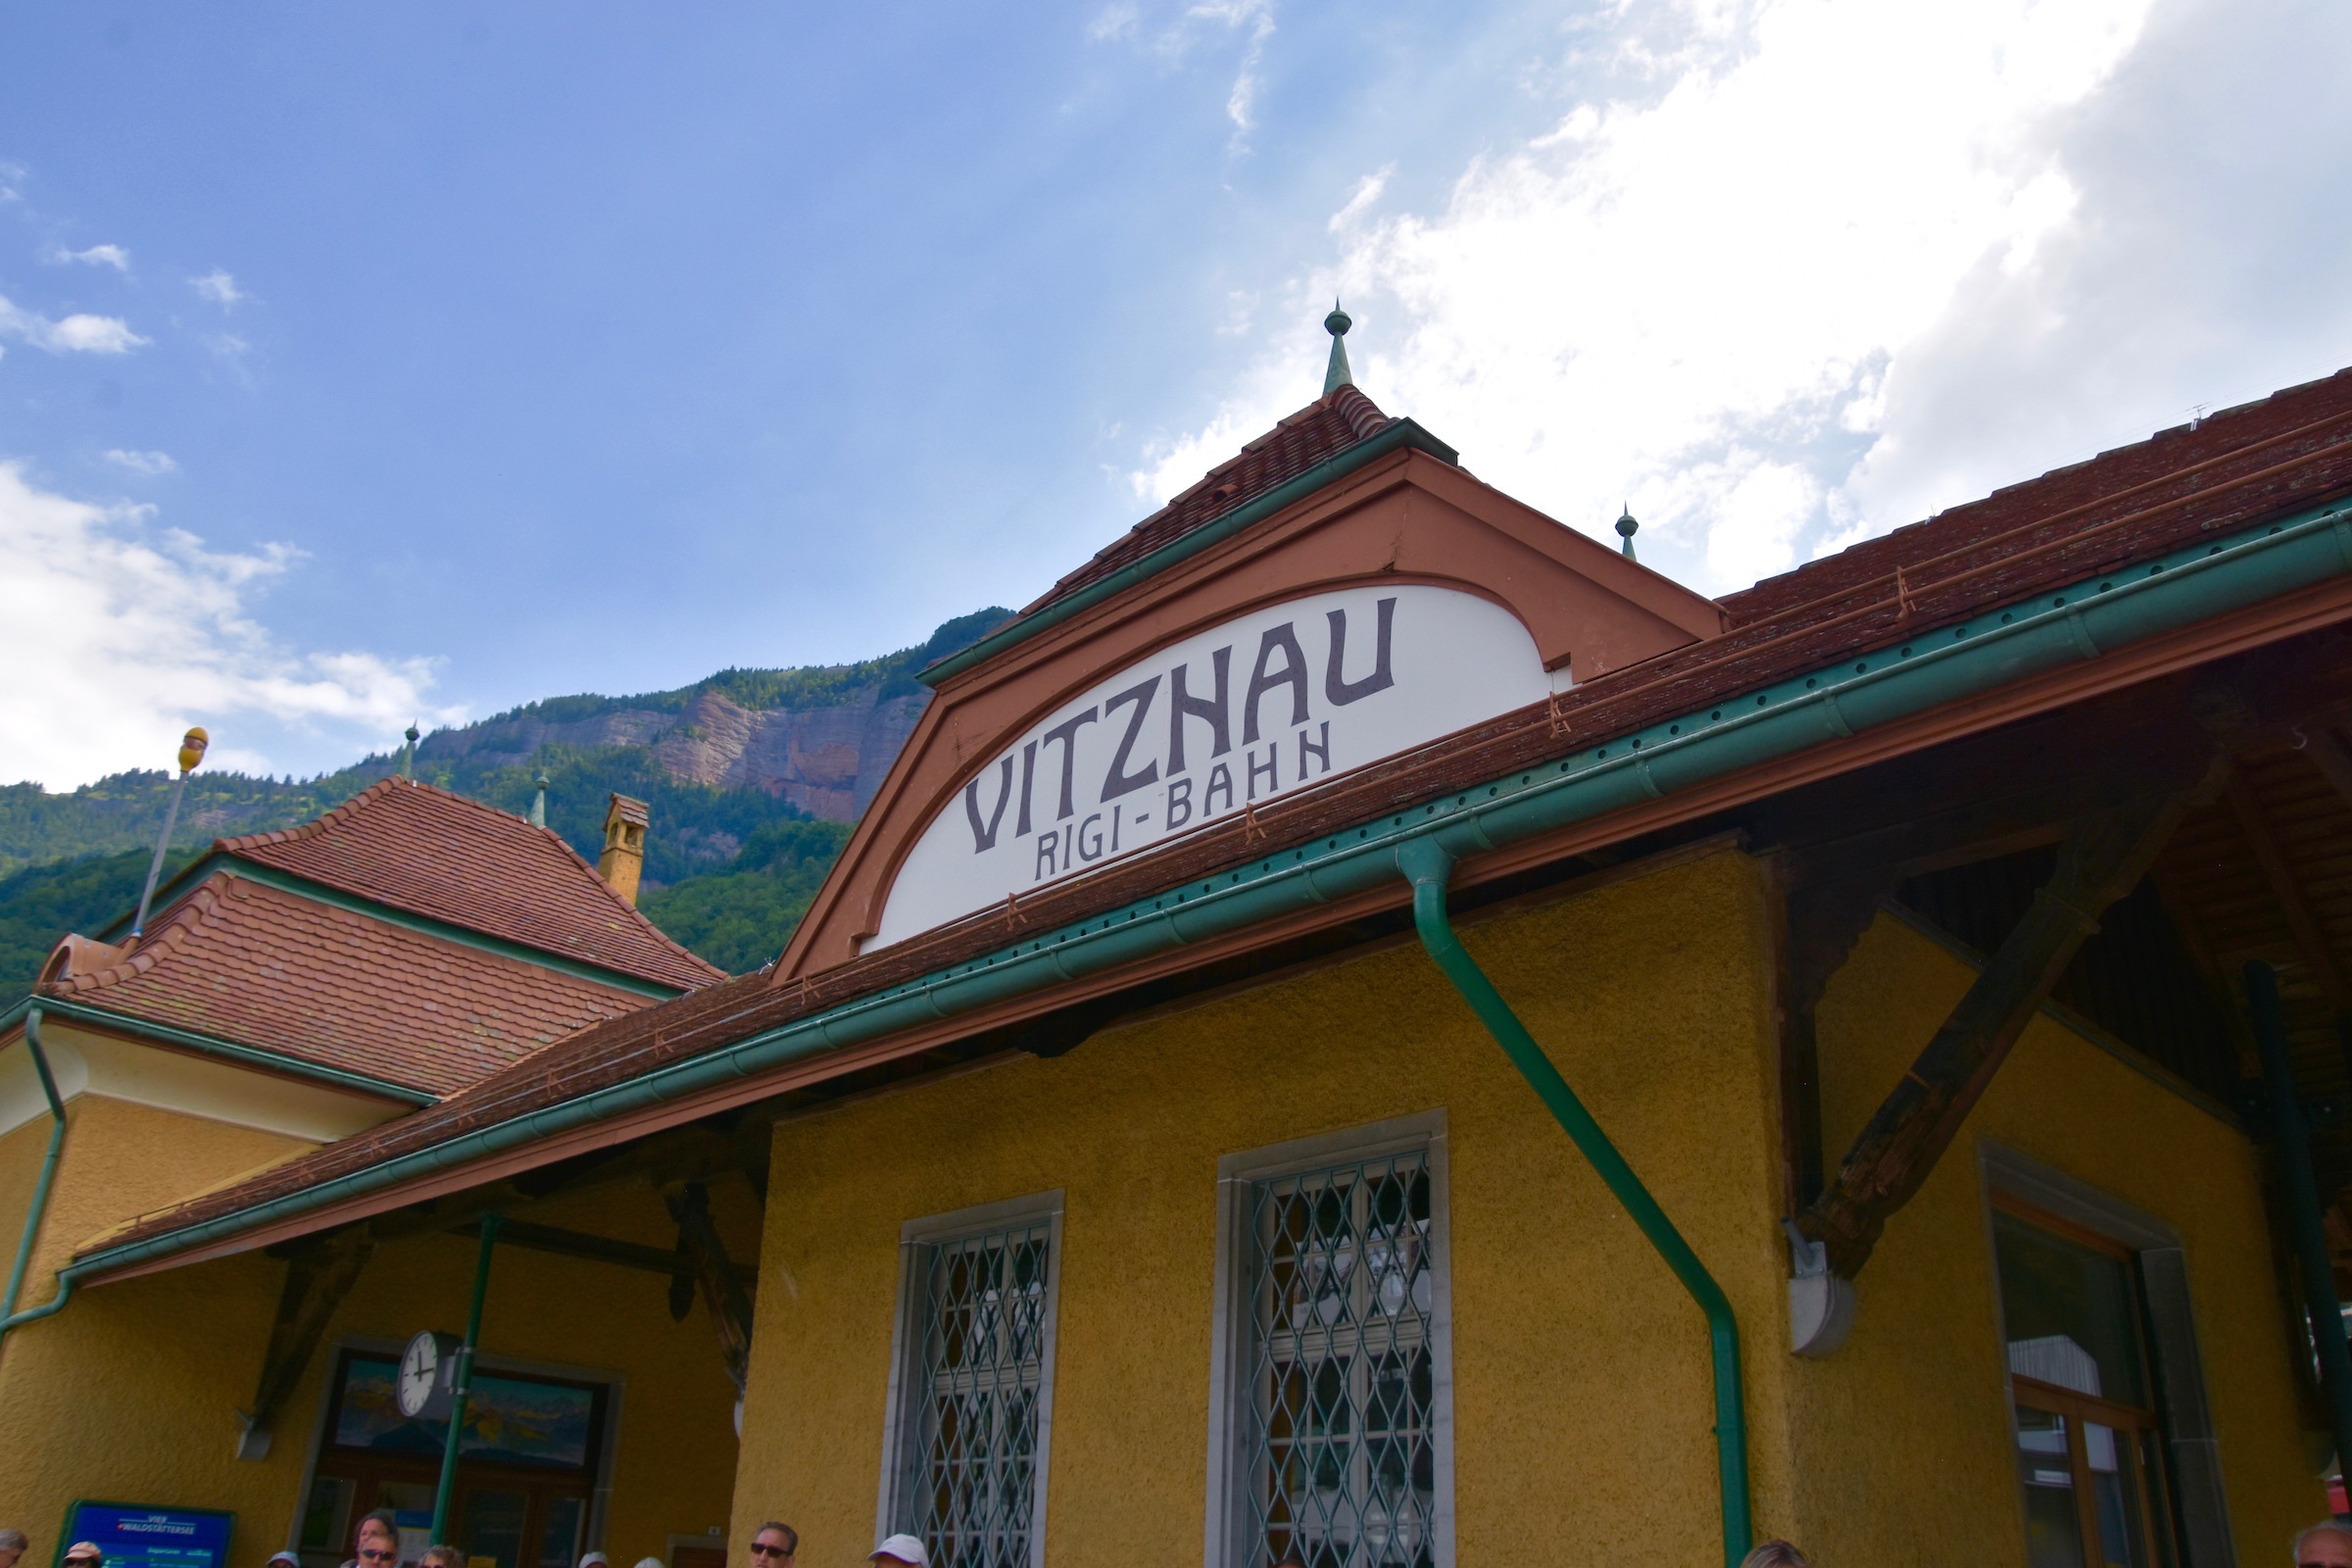 Mount Rigi Station, Vitznau